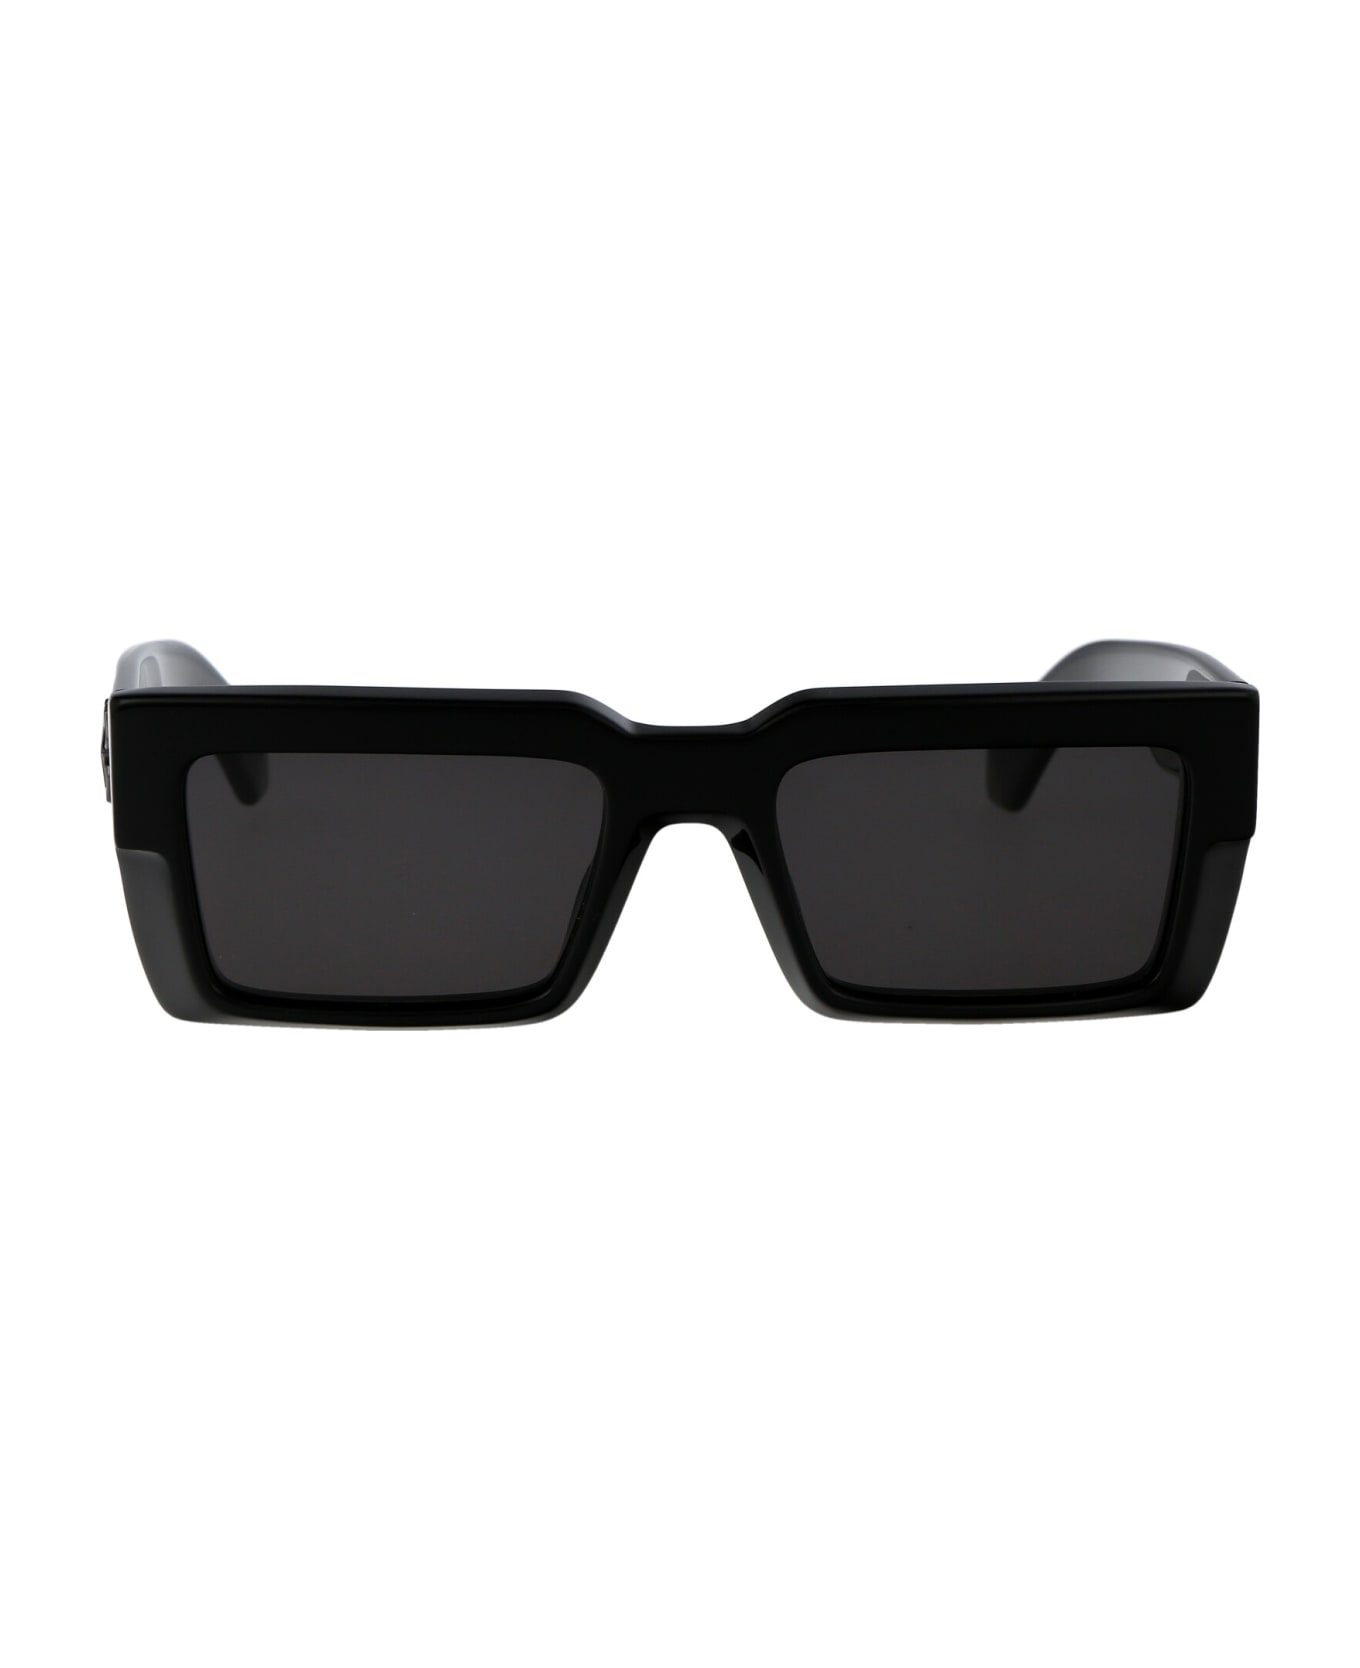 Off-White Moberly Sunglasses - 1007 BLACK